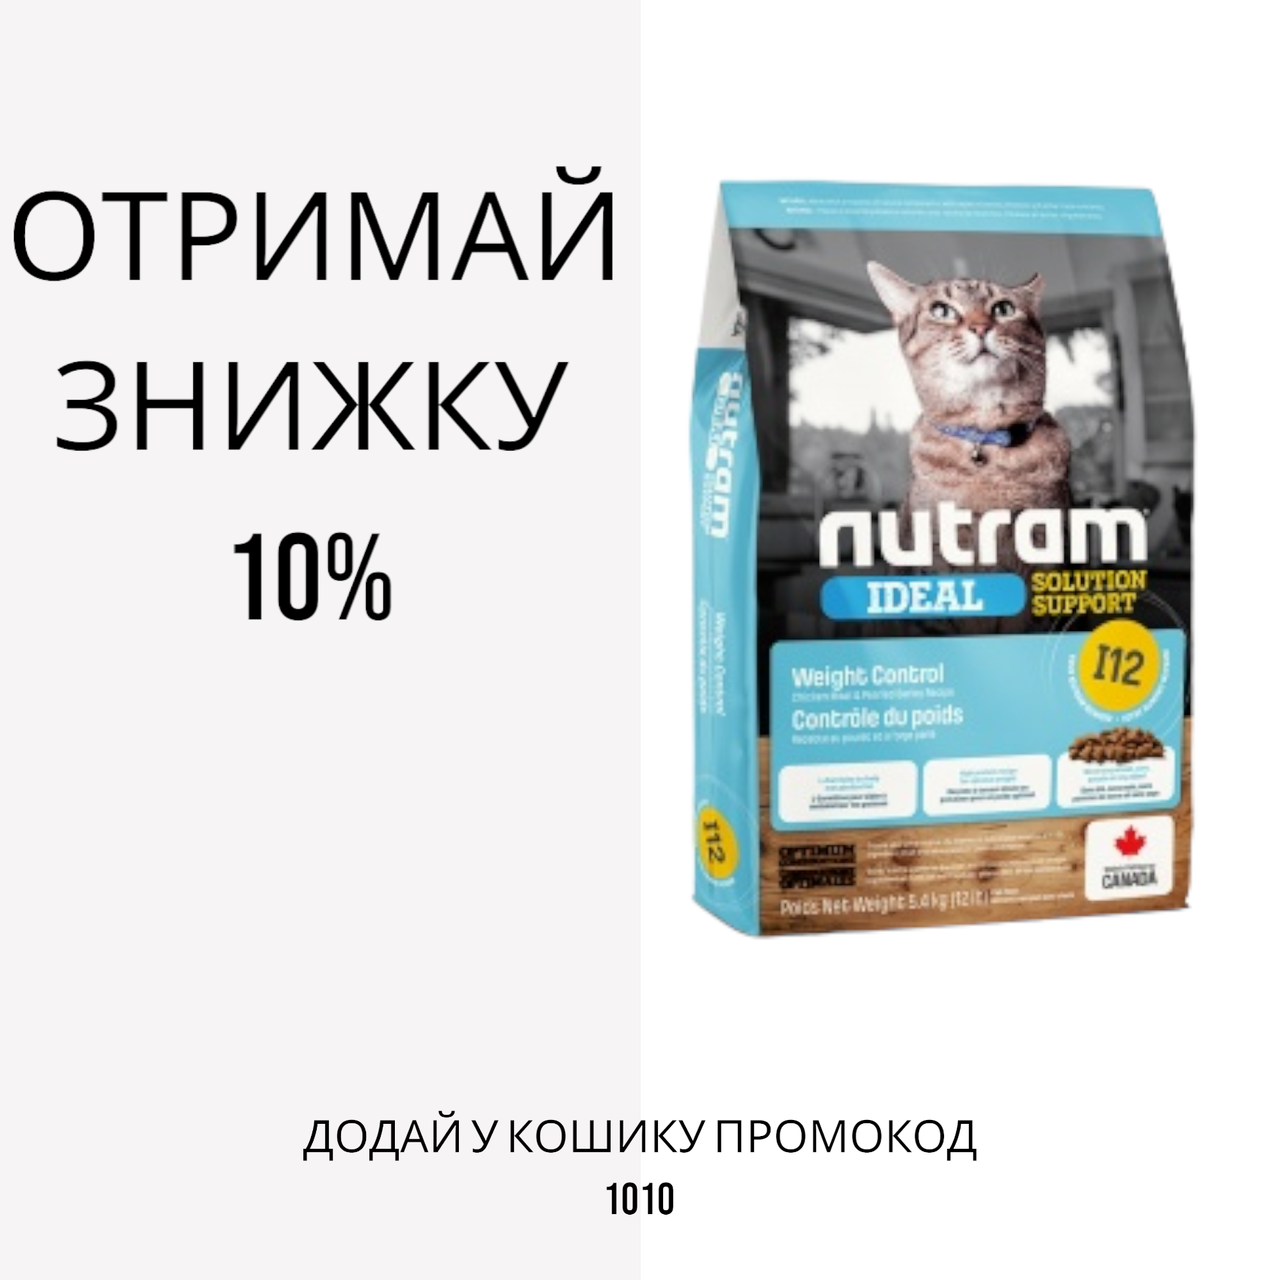 Nutram (Нутрам) I12 Ideal Solution Support Weight Control Cat Food корм для контролю ваги, 20 кг